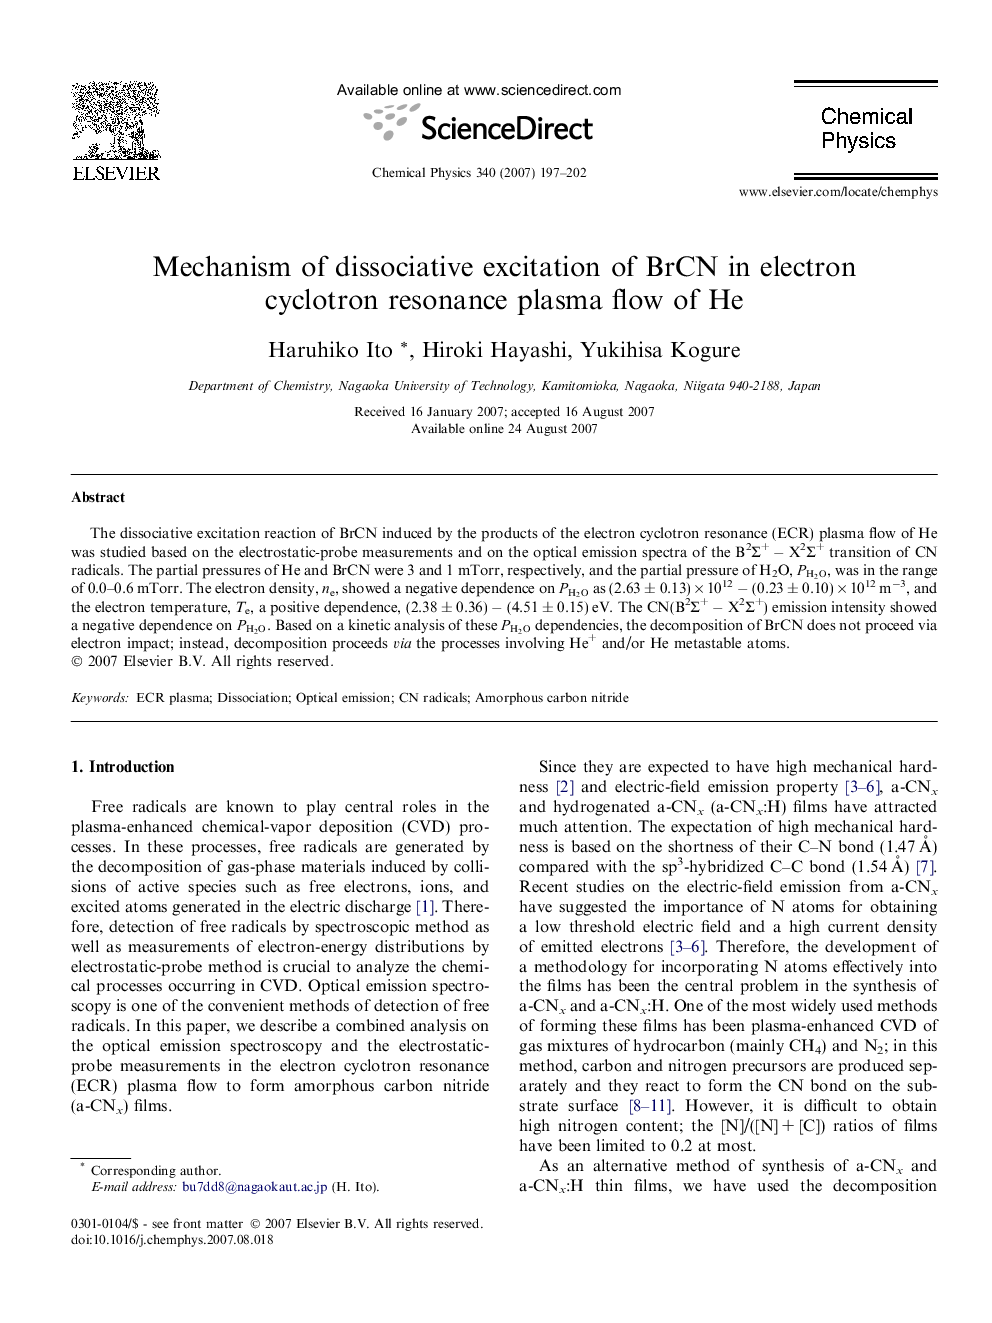 Mechanism of dissociative excitation of BrCN in electron cyclotron resonance plasma flow of He